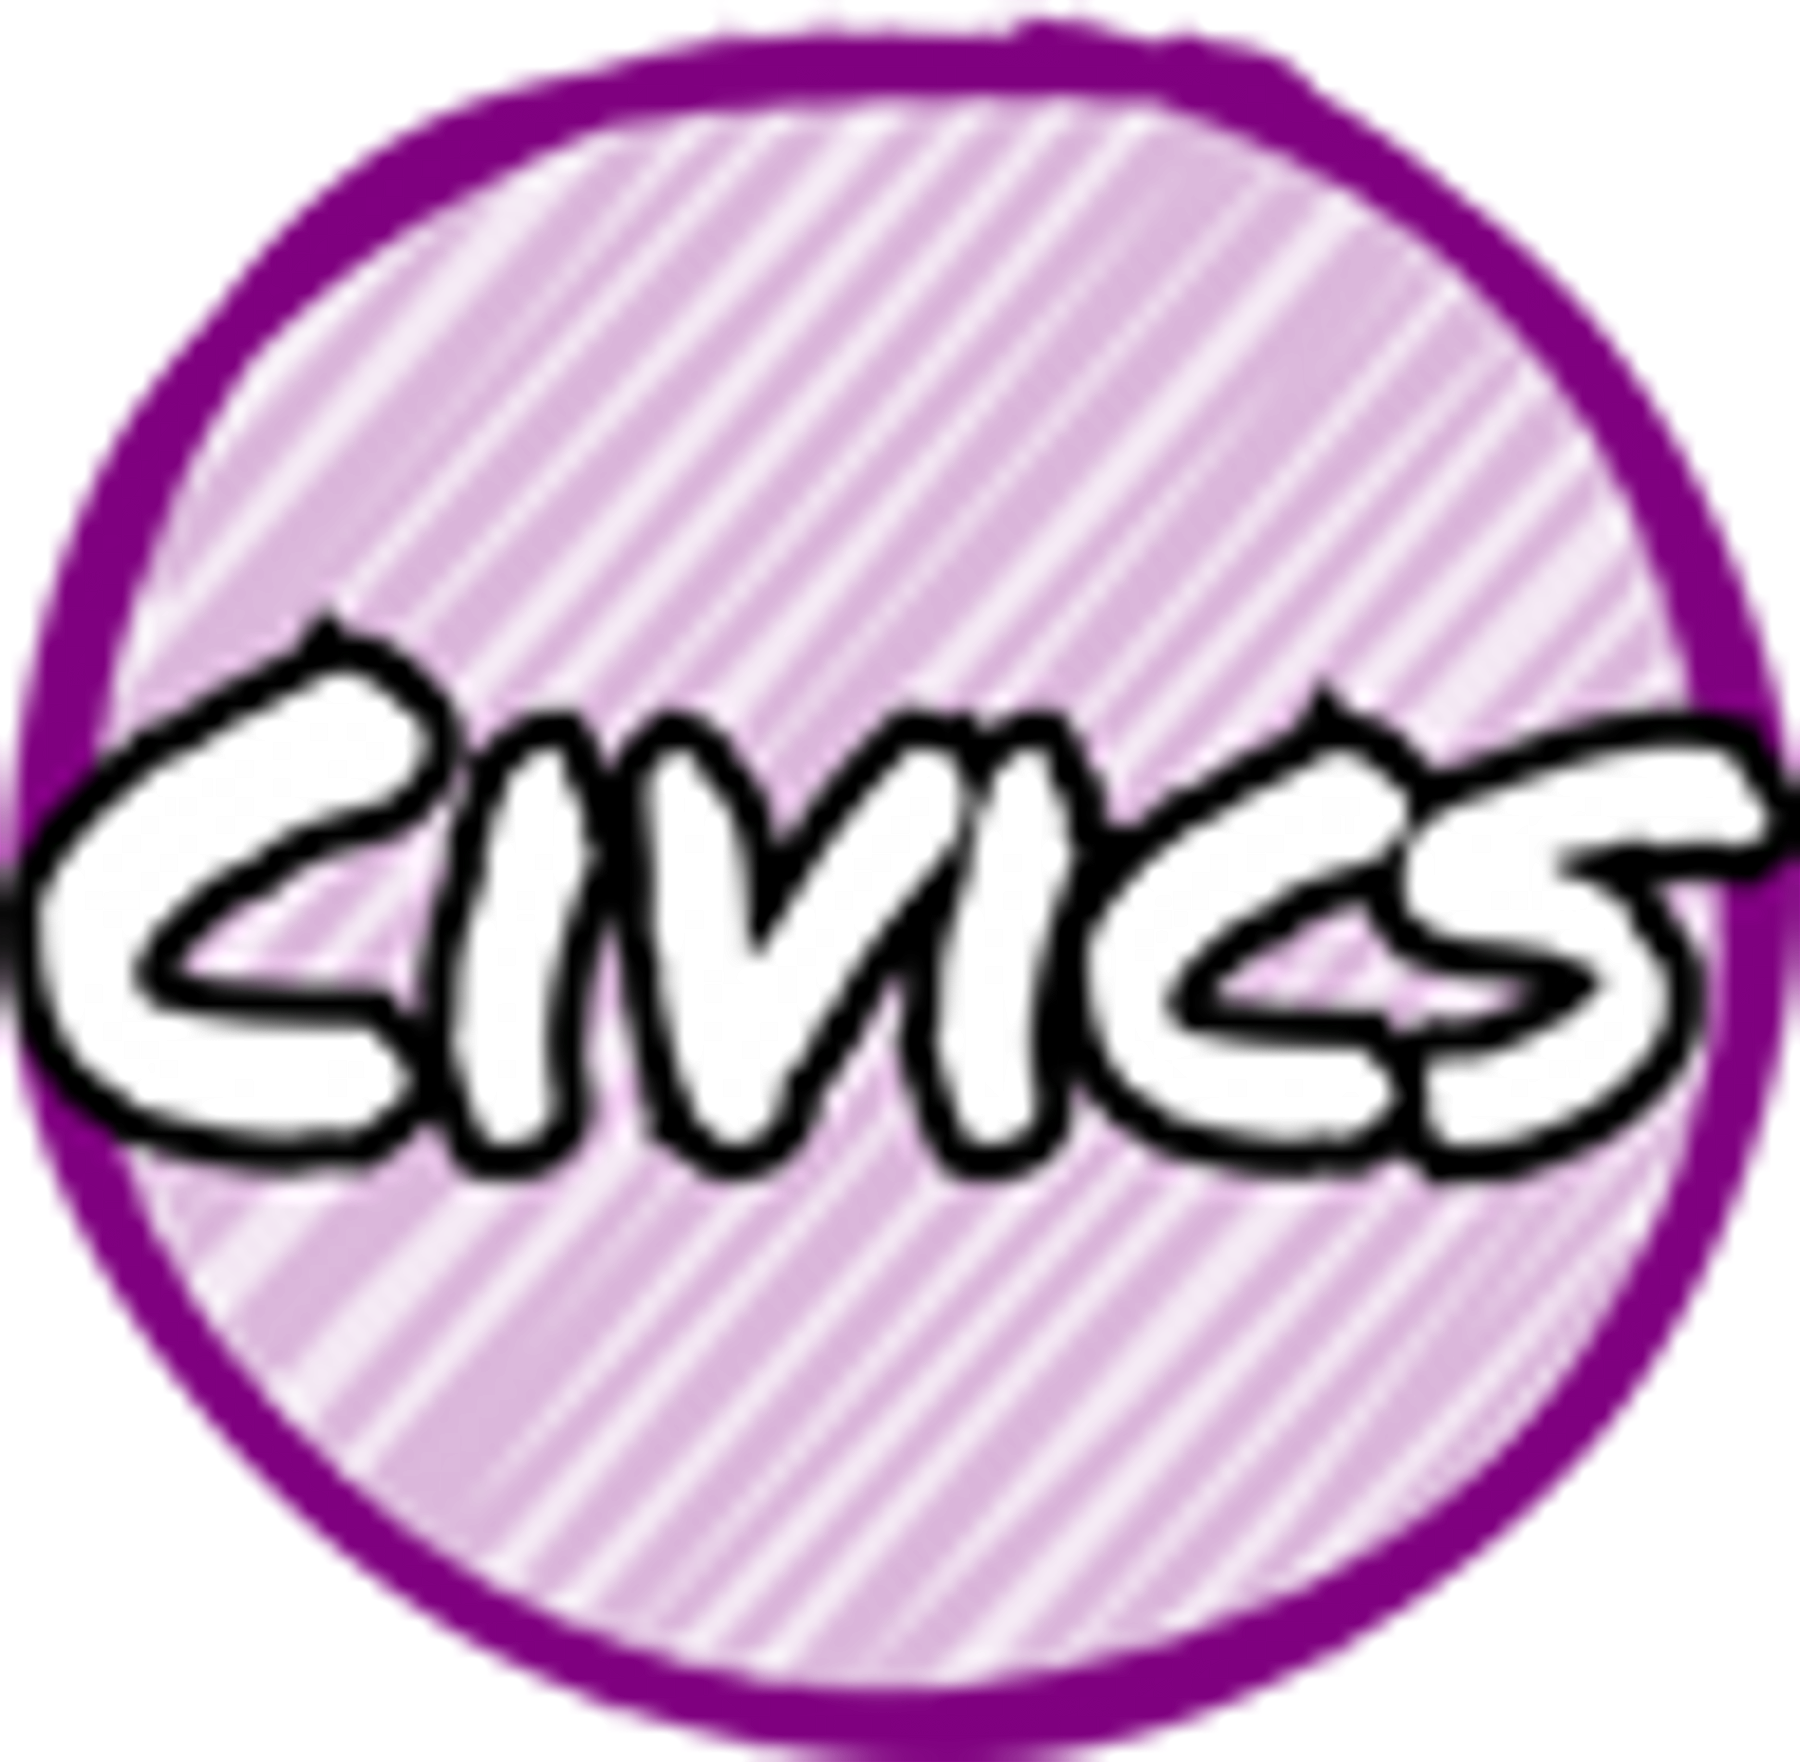 a blog about civics